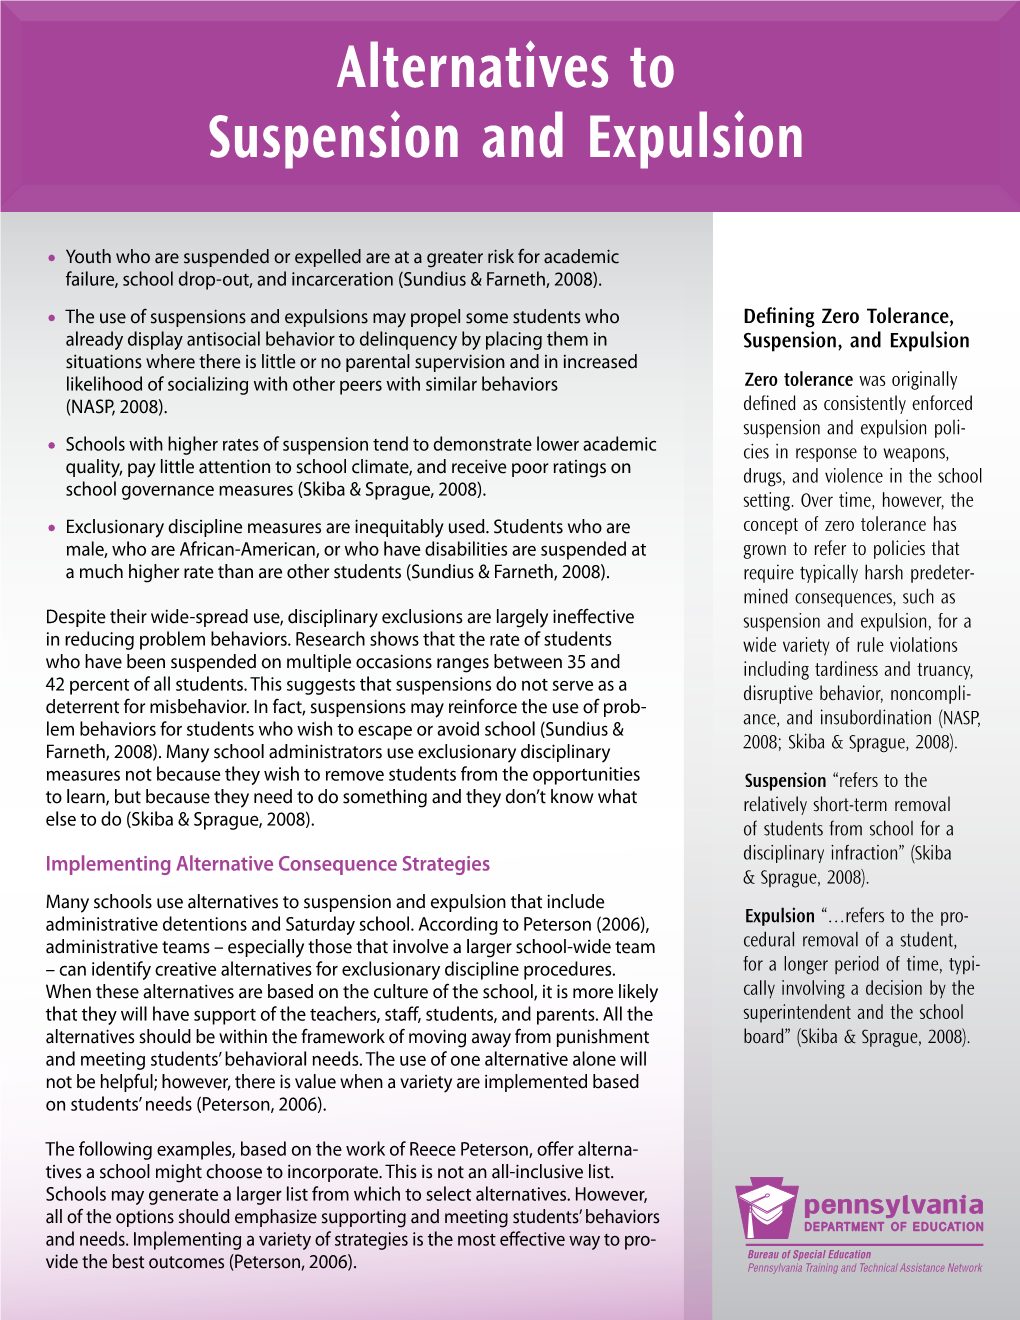 Alternatives to Suspension and Expulsion